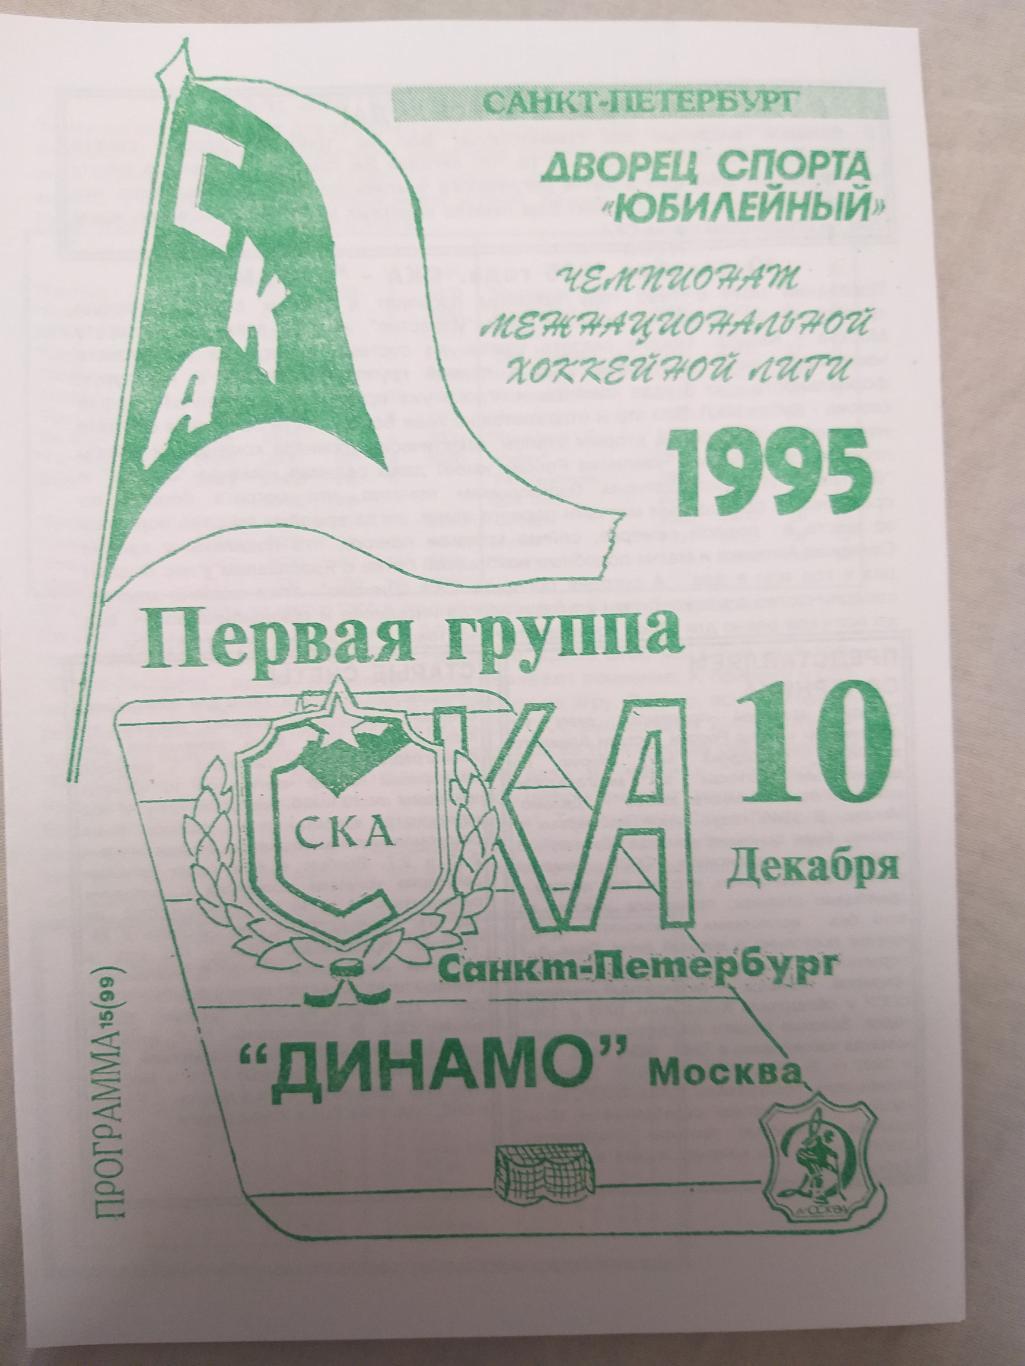 СКА-Динамо(Москва) 10.12.1995 второй вид